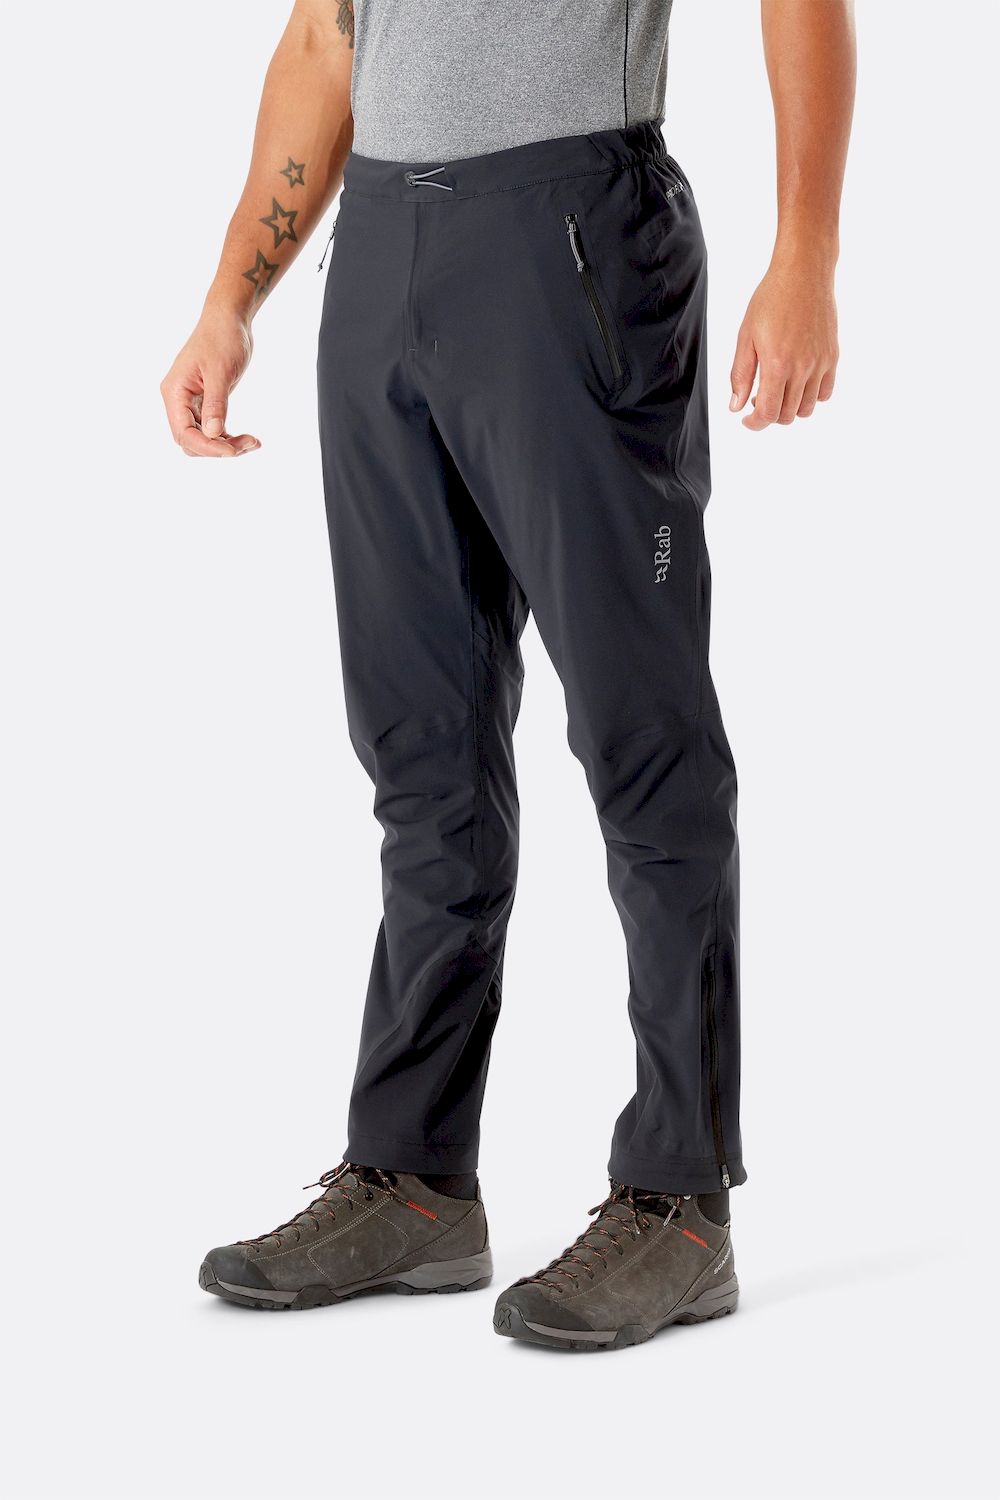 Rab Kinetic 2.0 - Walking trousers - Men's